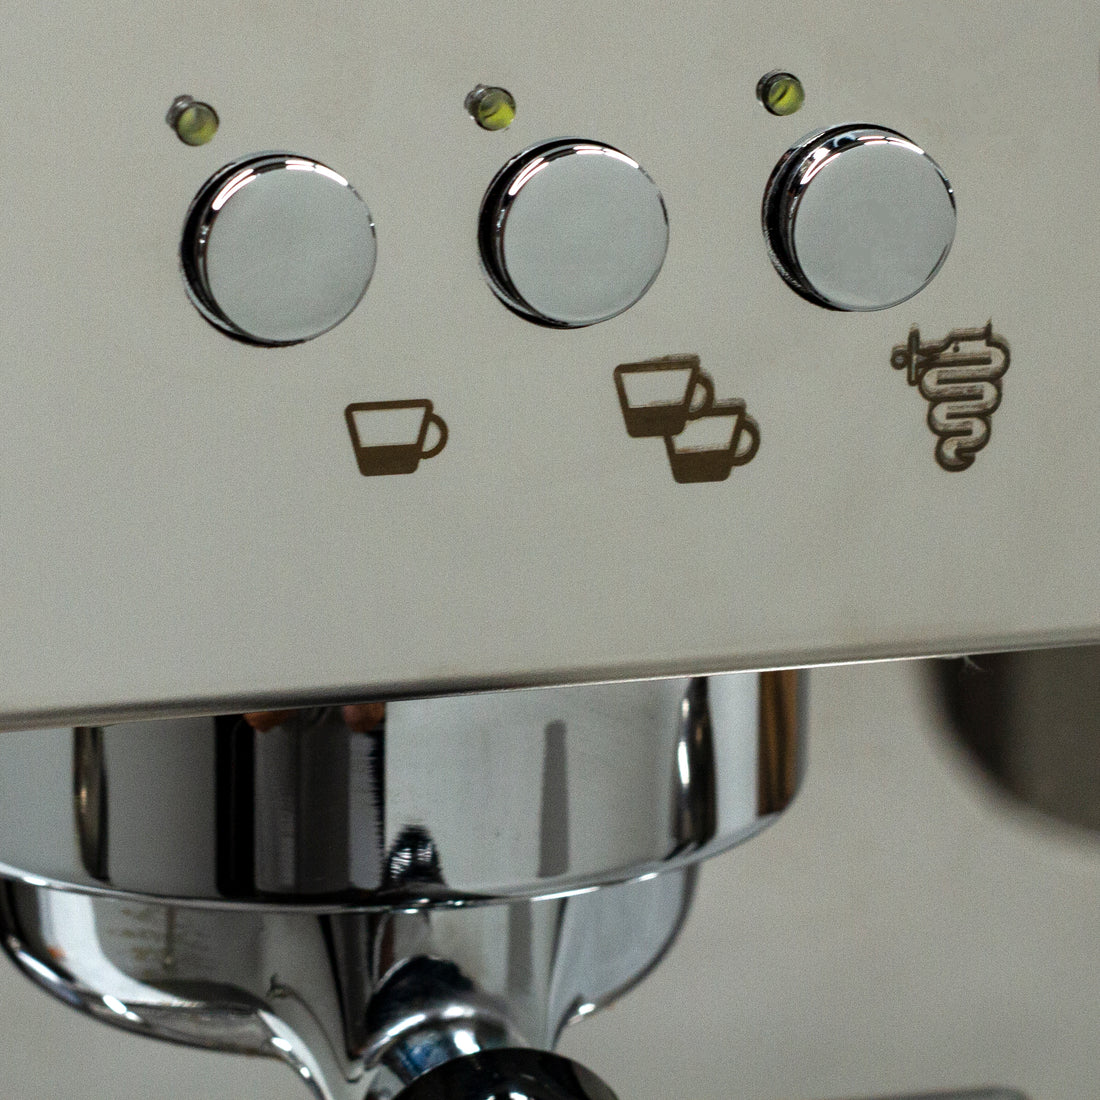 Bezzera BZ13 DE Nera Espresso Machine - Special Edition